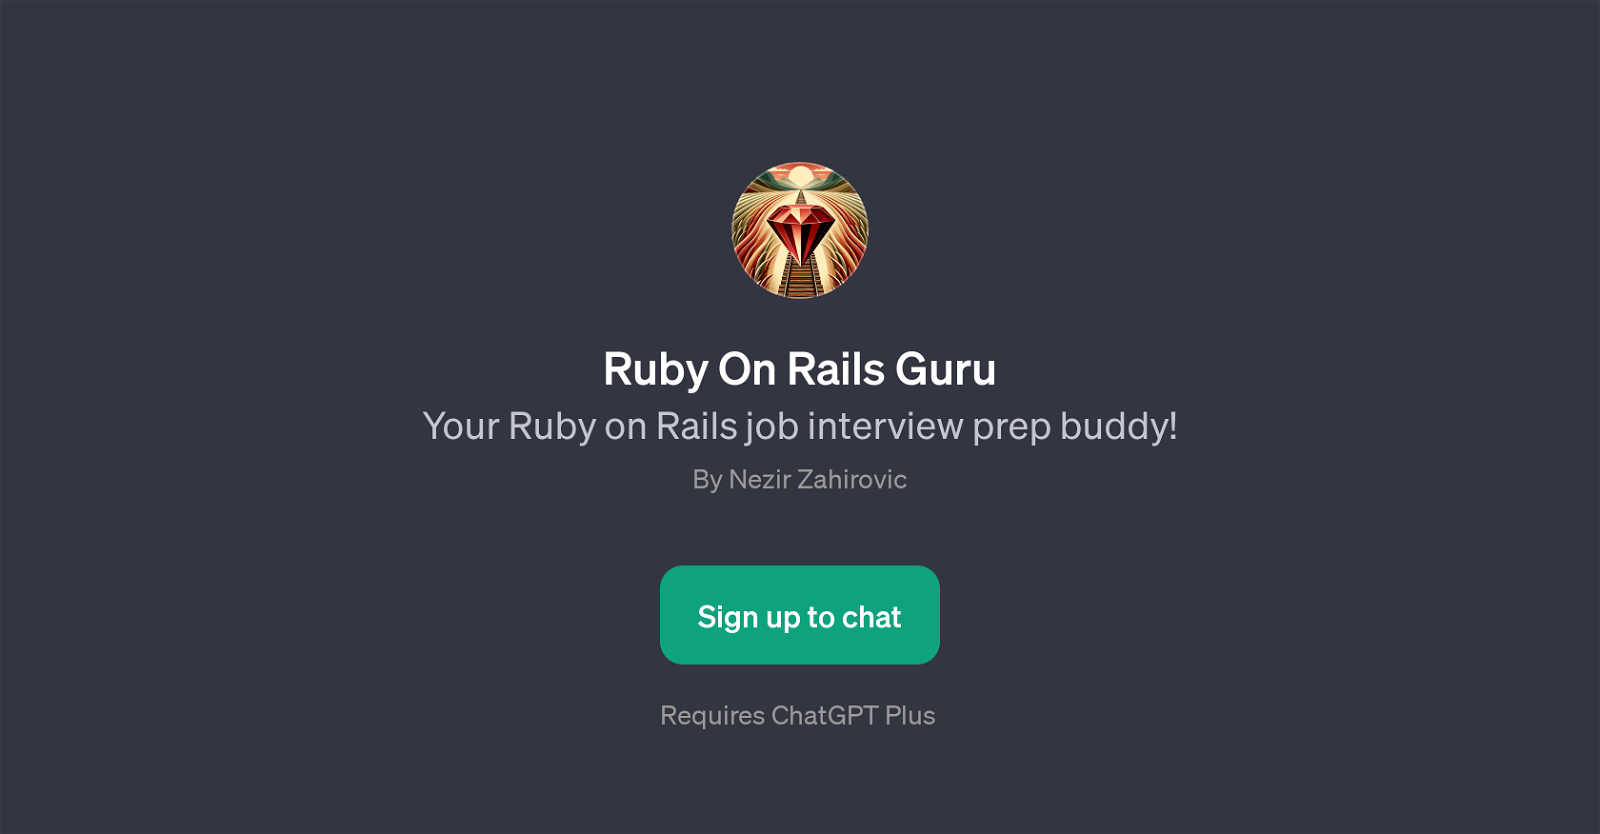 Ruby On Rails Guru website